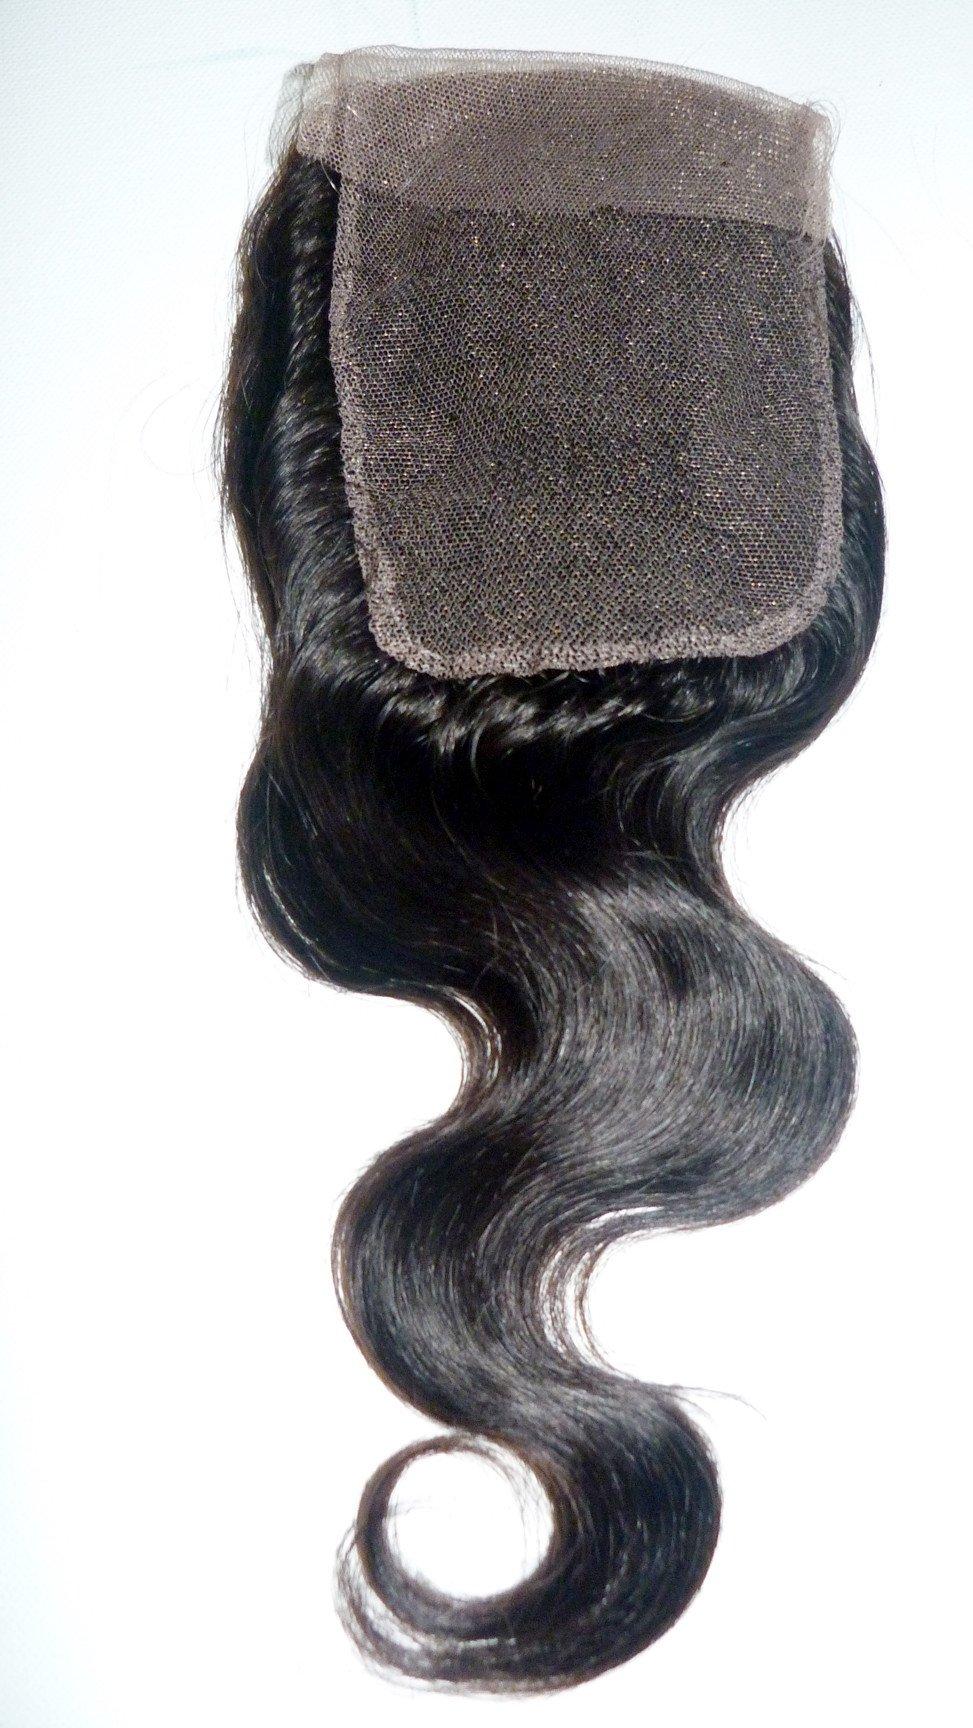 Indischer Virgin-Remy-Spitzenverschluss – 10,2 x 10,2 cm – Virgin Hair & Beauty, die besten Haarverlängerungen, echtes Virgin-Menschenhaar.